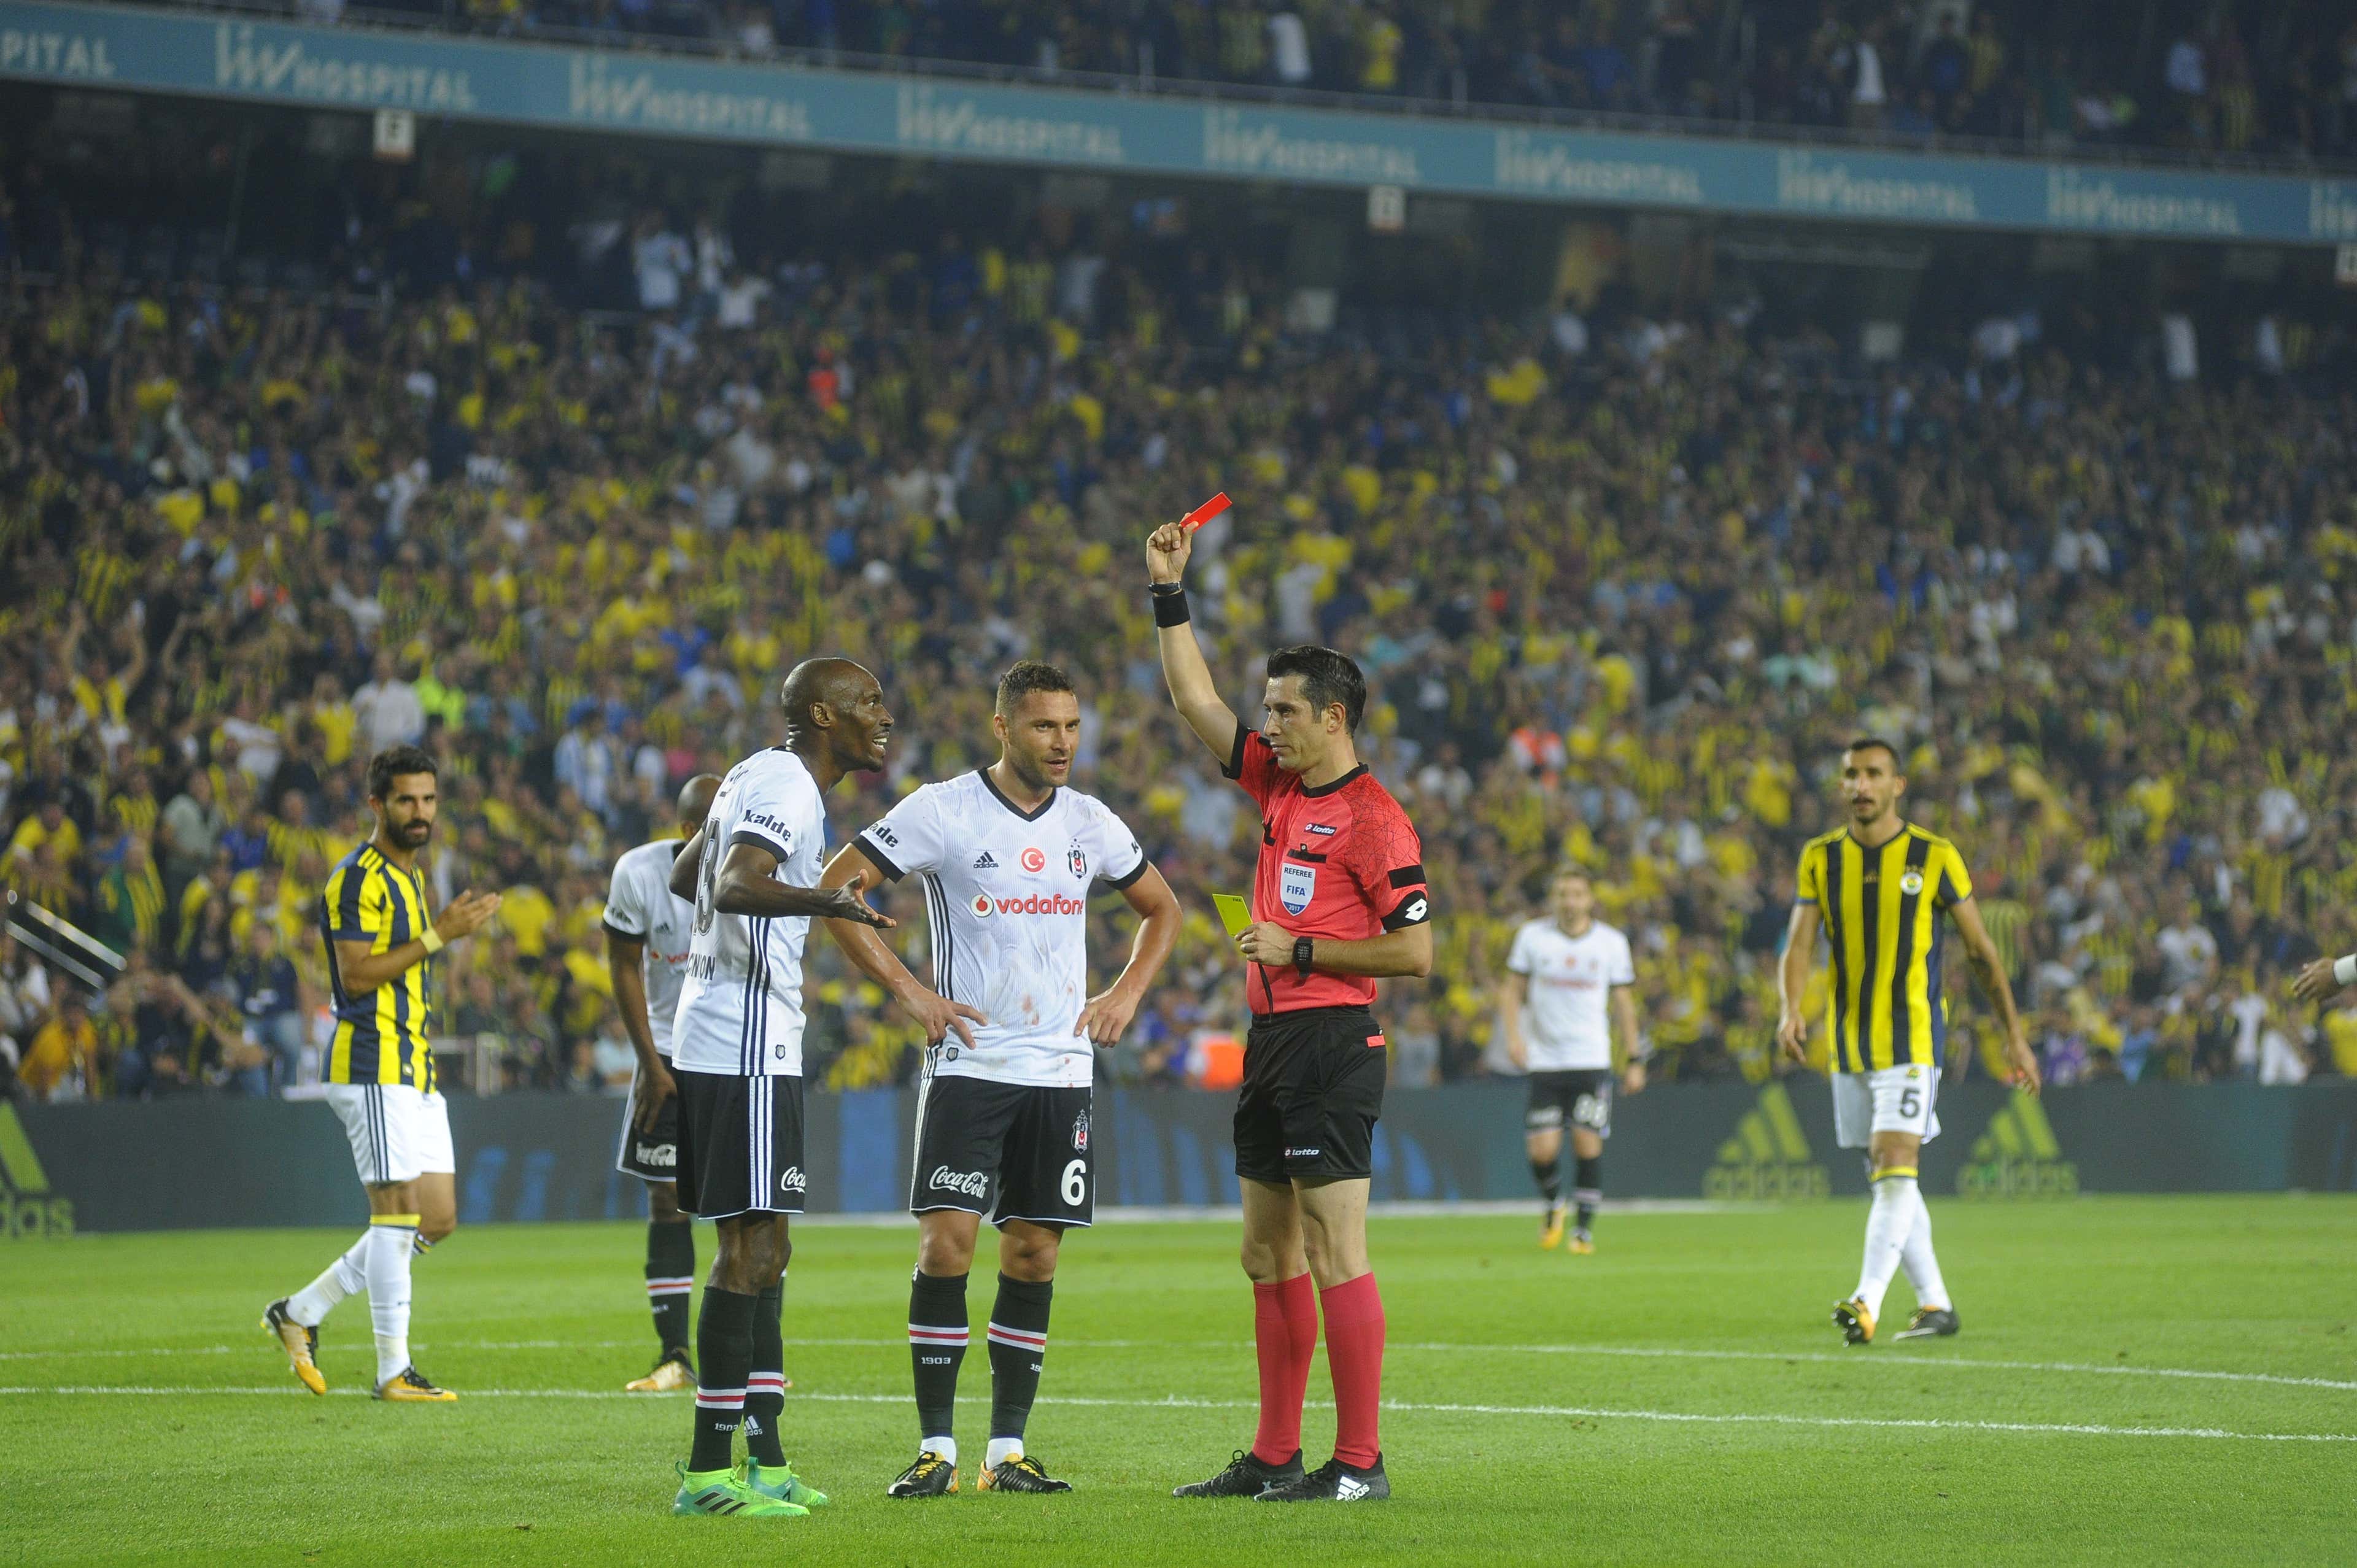 Antalyaspor vs Fenerbahçe: A Turkish Football Rivalry